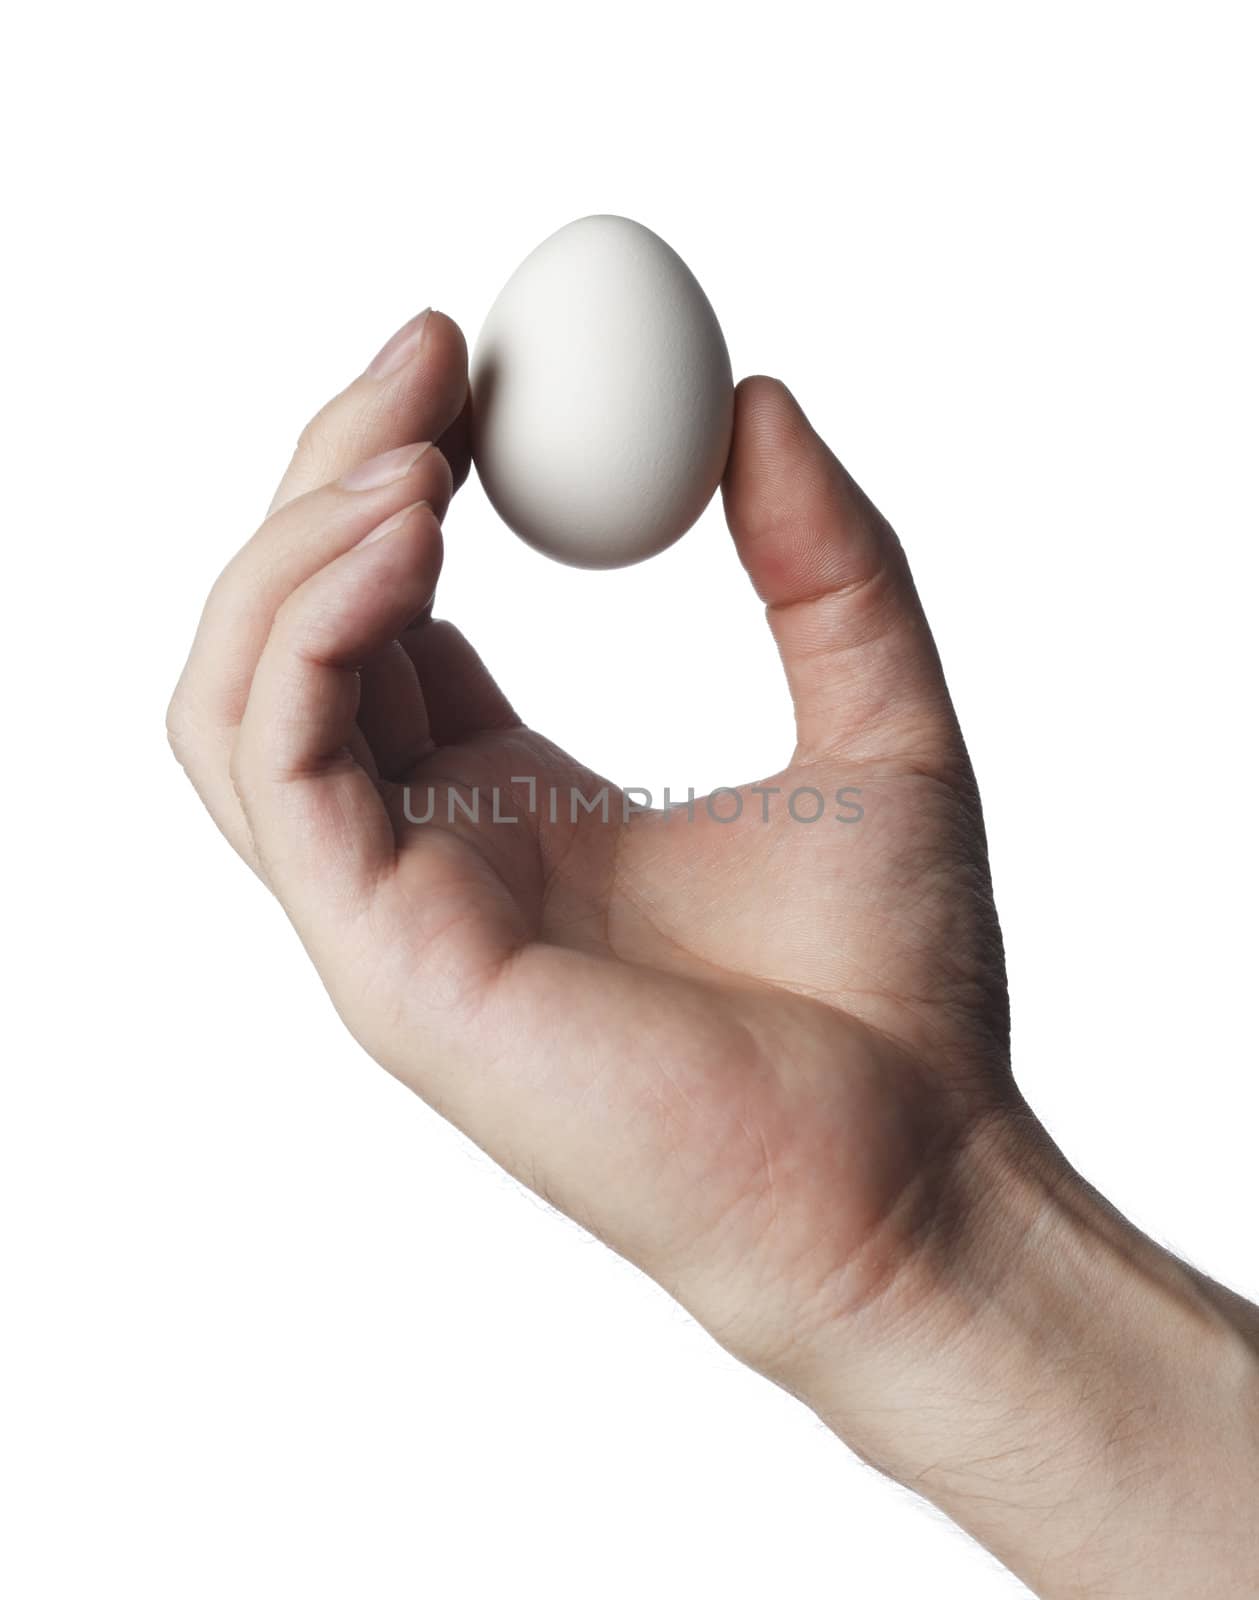 Egg by Stocksnapper